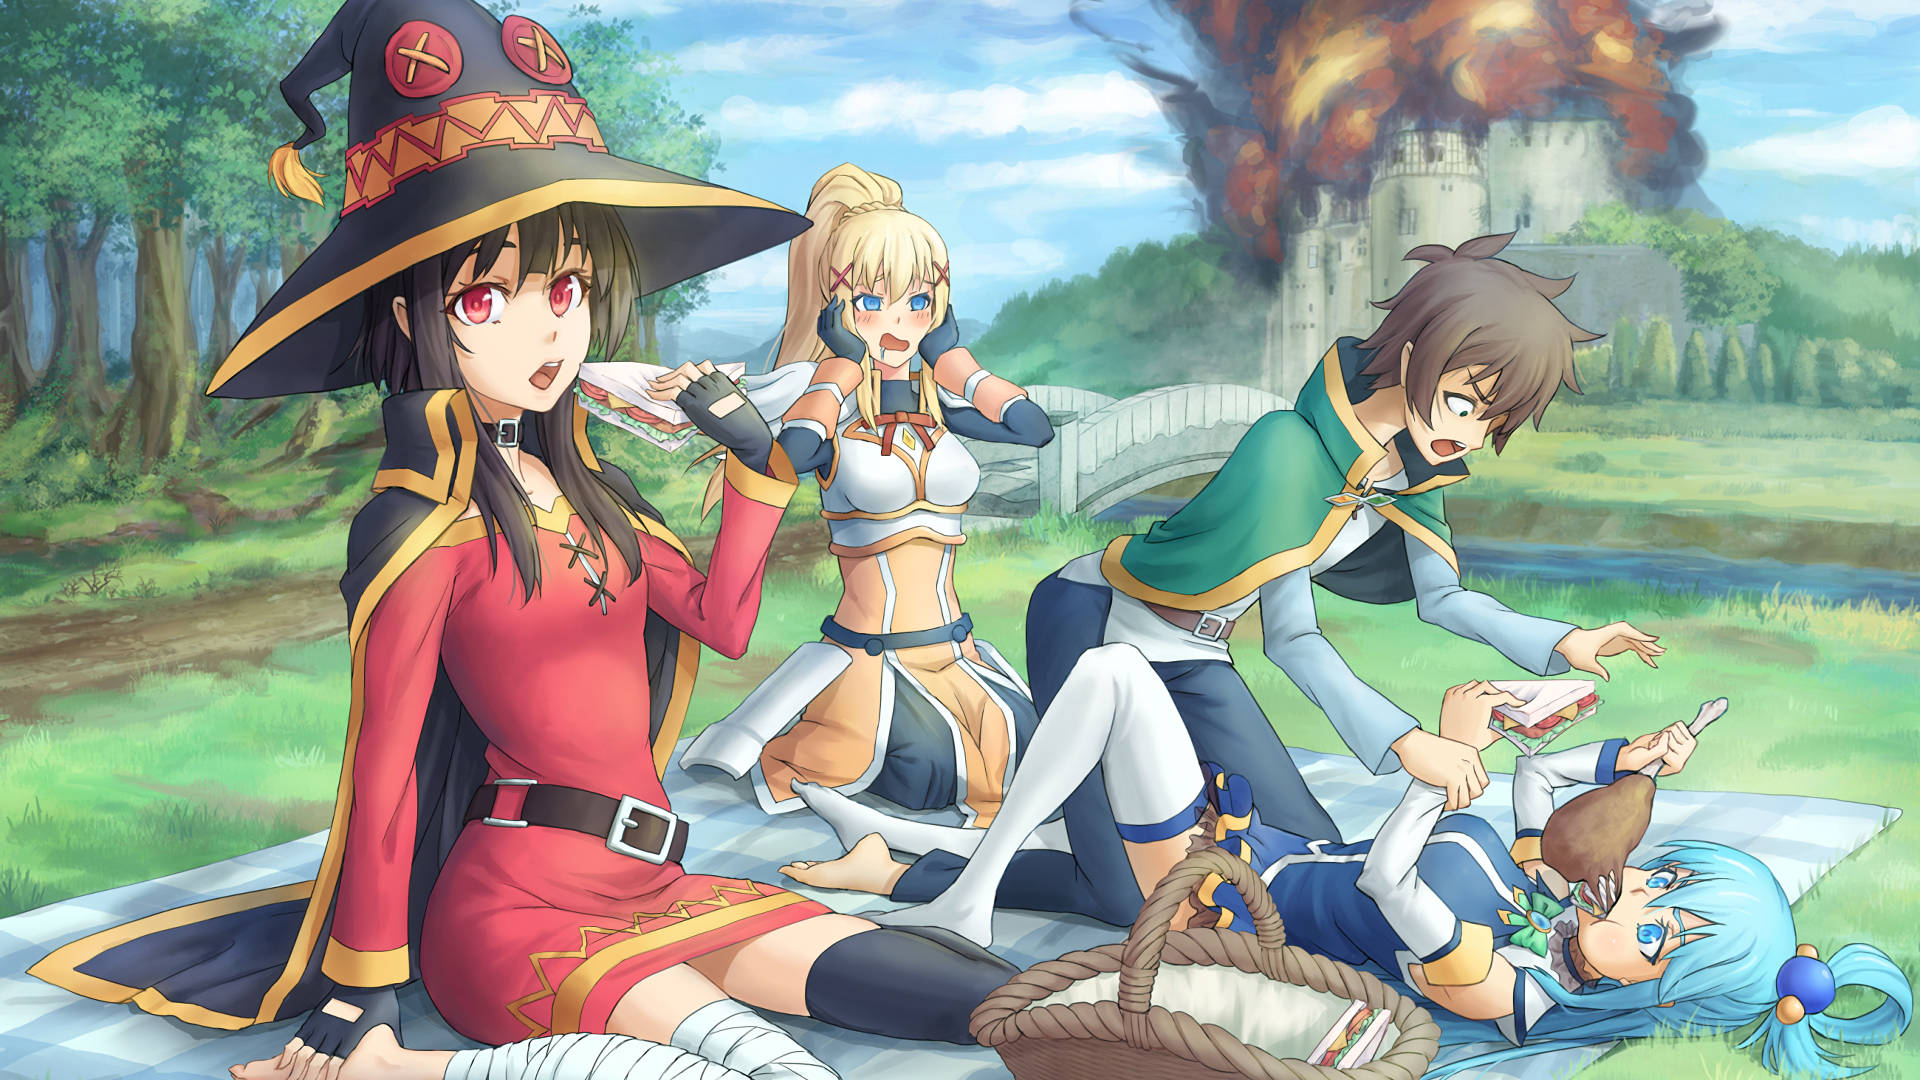 KonoSuba Team: Megumin, Kazuma and Aqua Ready for Adventure Wallpaper